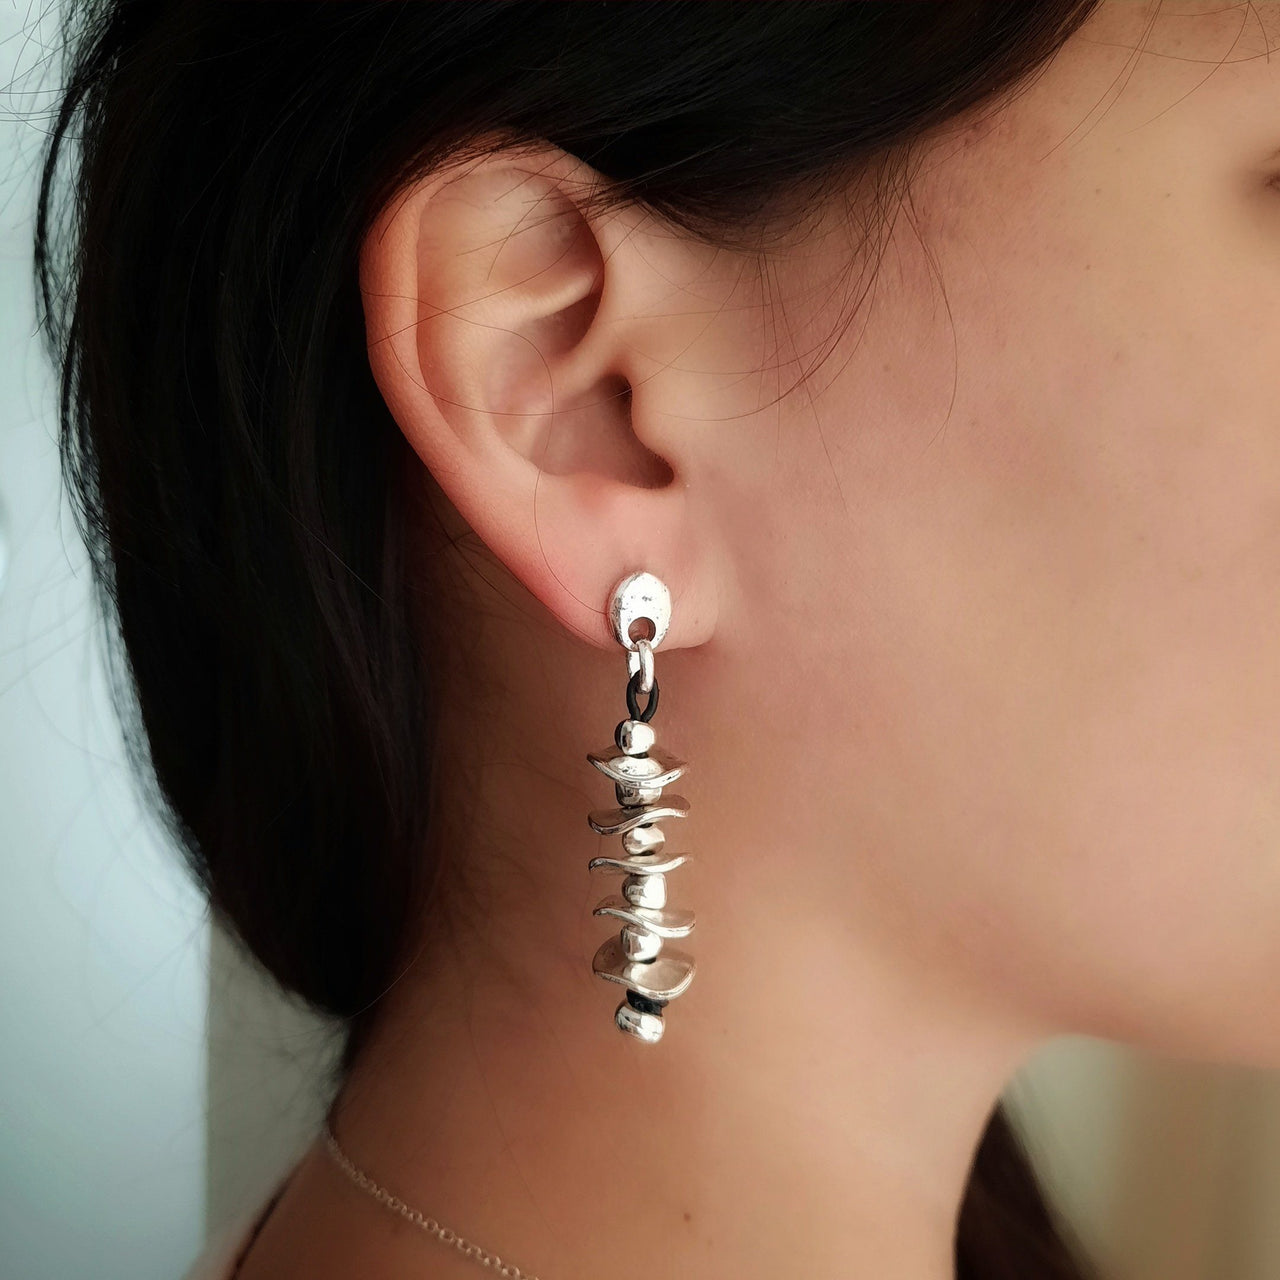 Lange Ohrringe mit Silber-Perlen - Amanita ko KOOMPLIMENTS